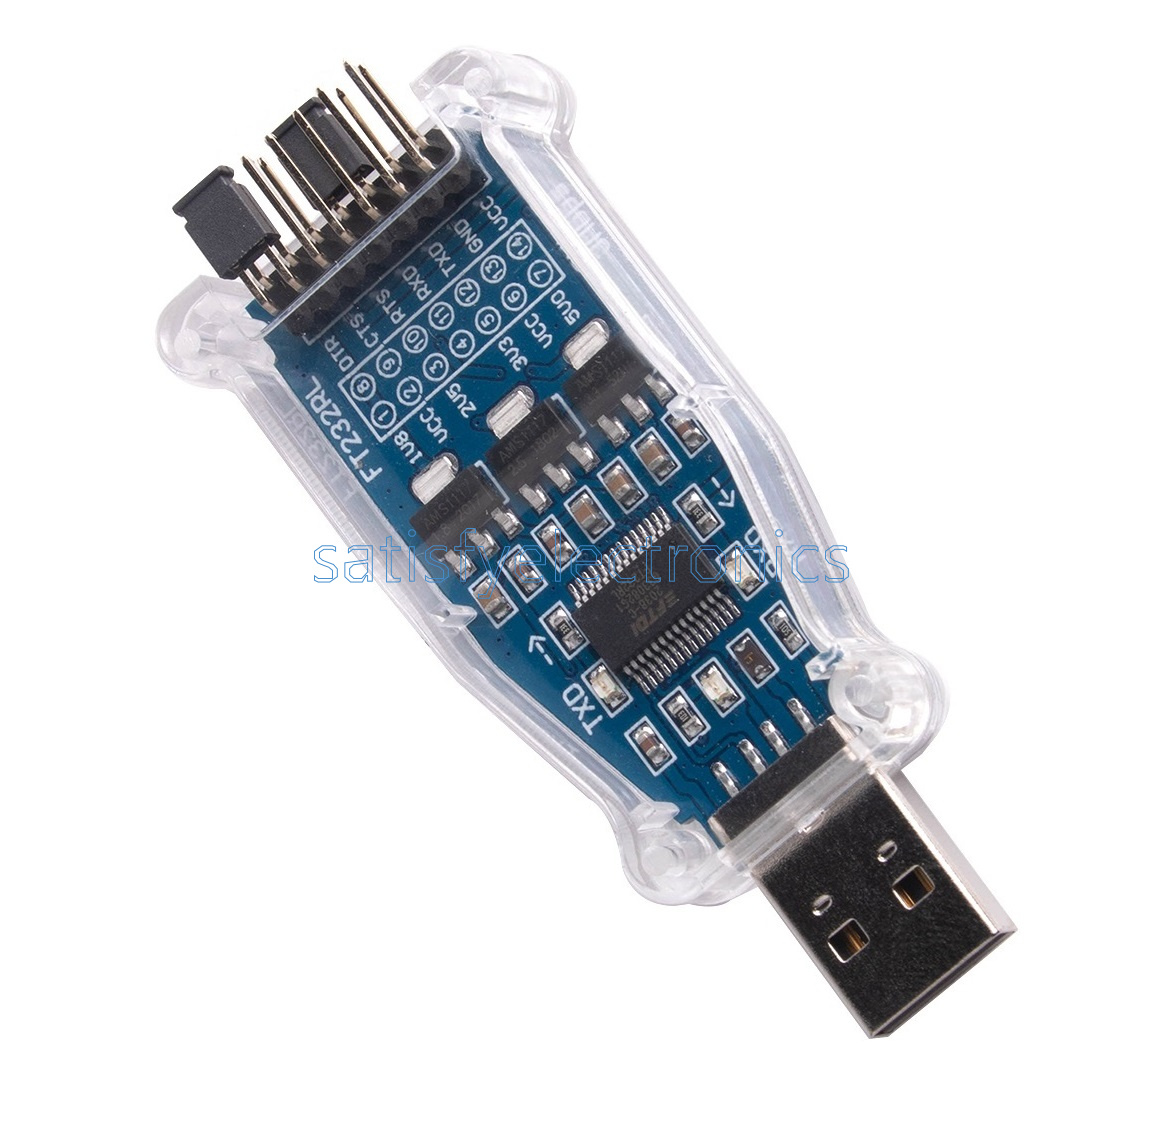 BuildYourCNC - FTDI TTL-232R 5V USB to UART (Serial) Converter